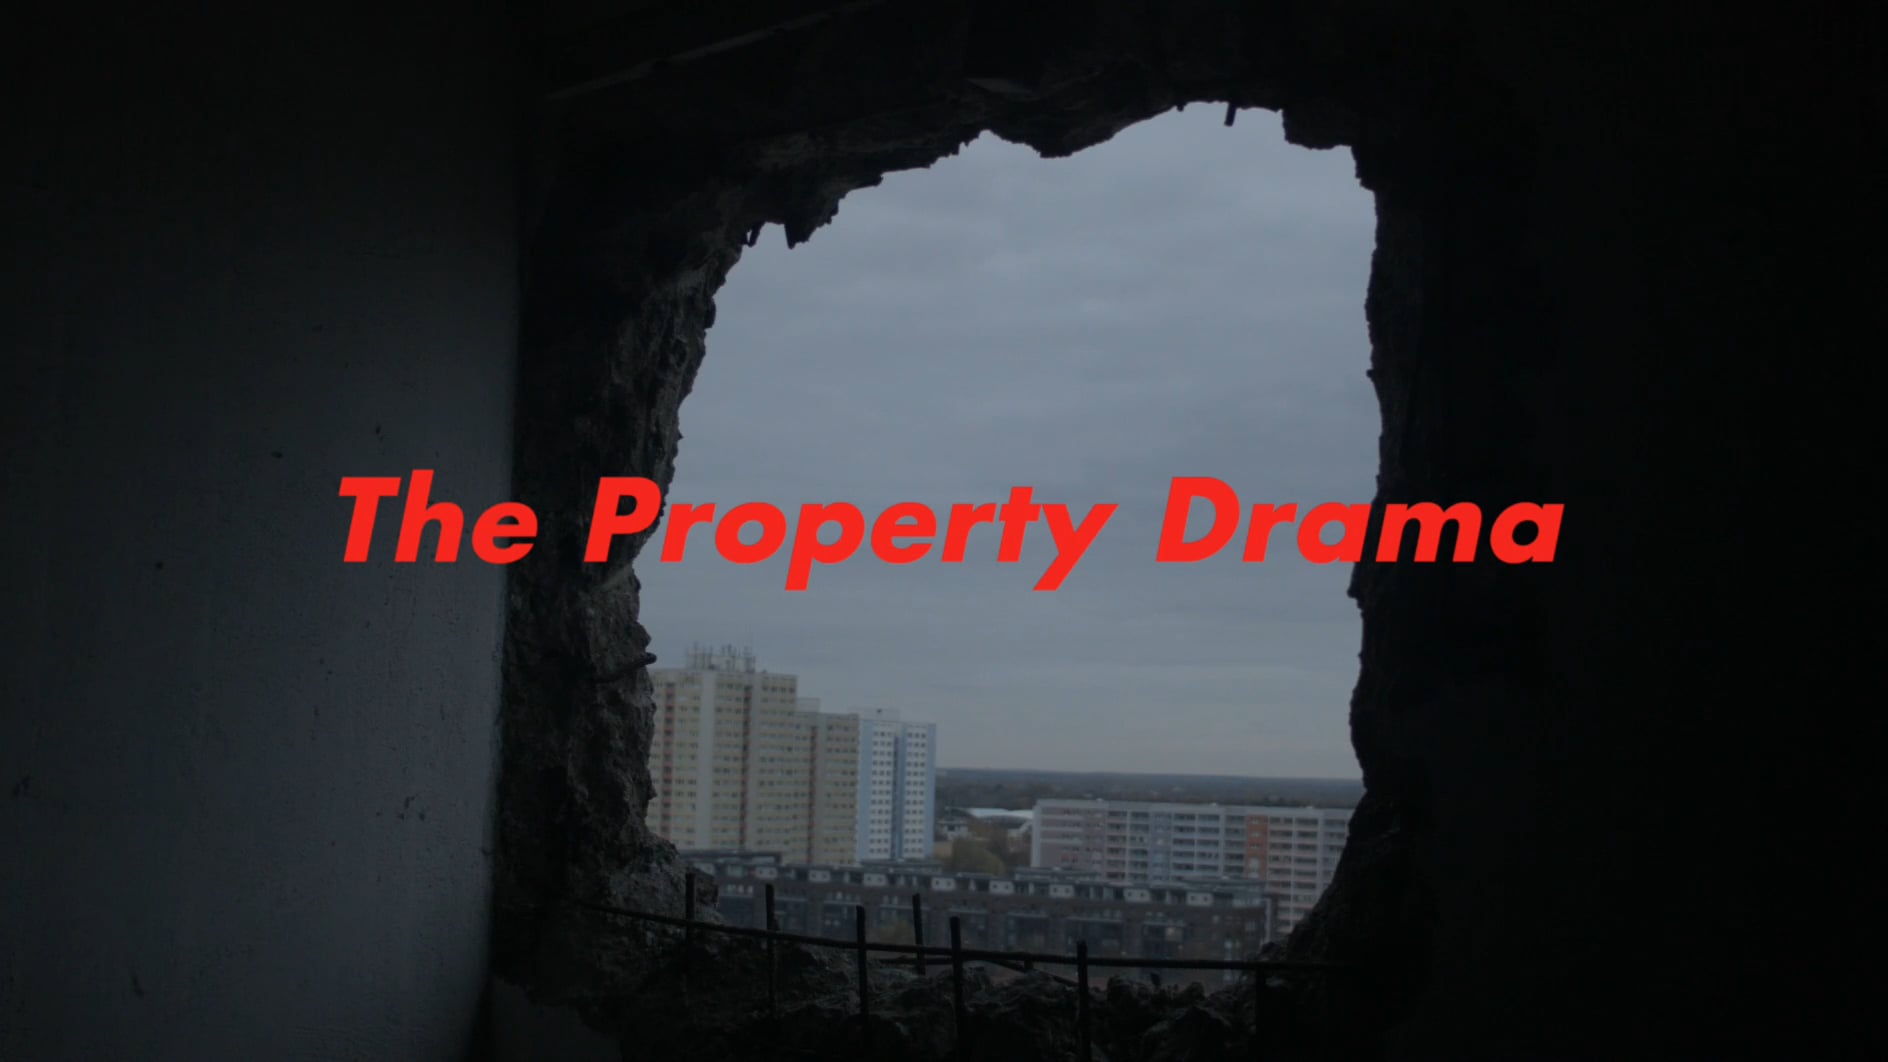 Watch The Property Drama (Trailer) Online Vimeo On Demand on Vimeo